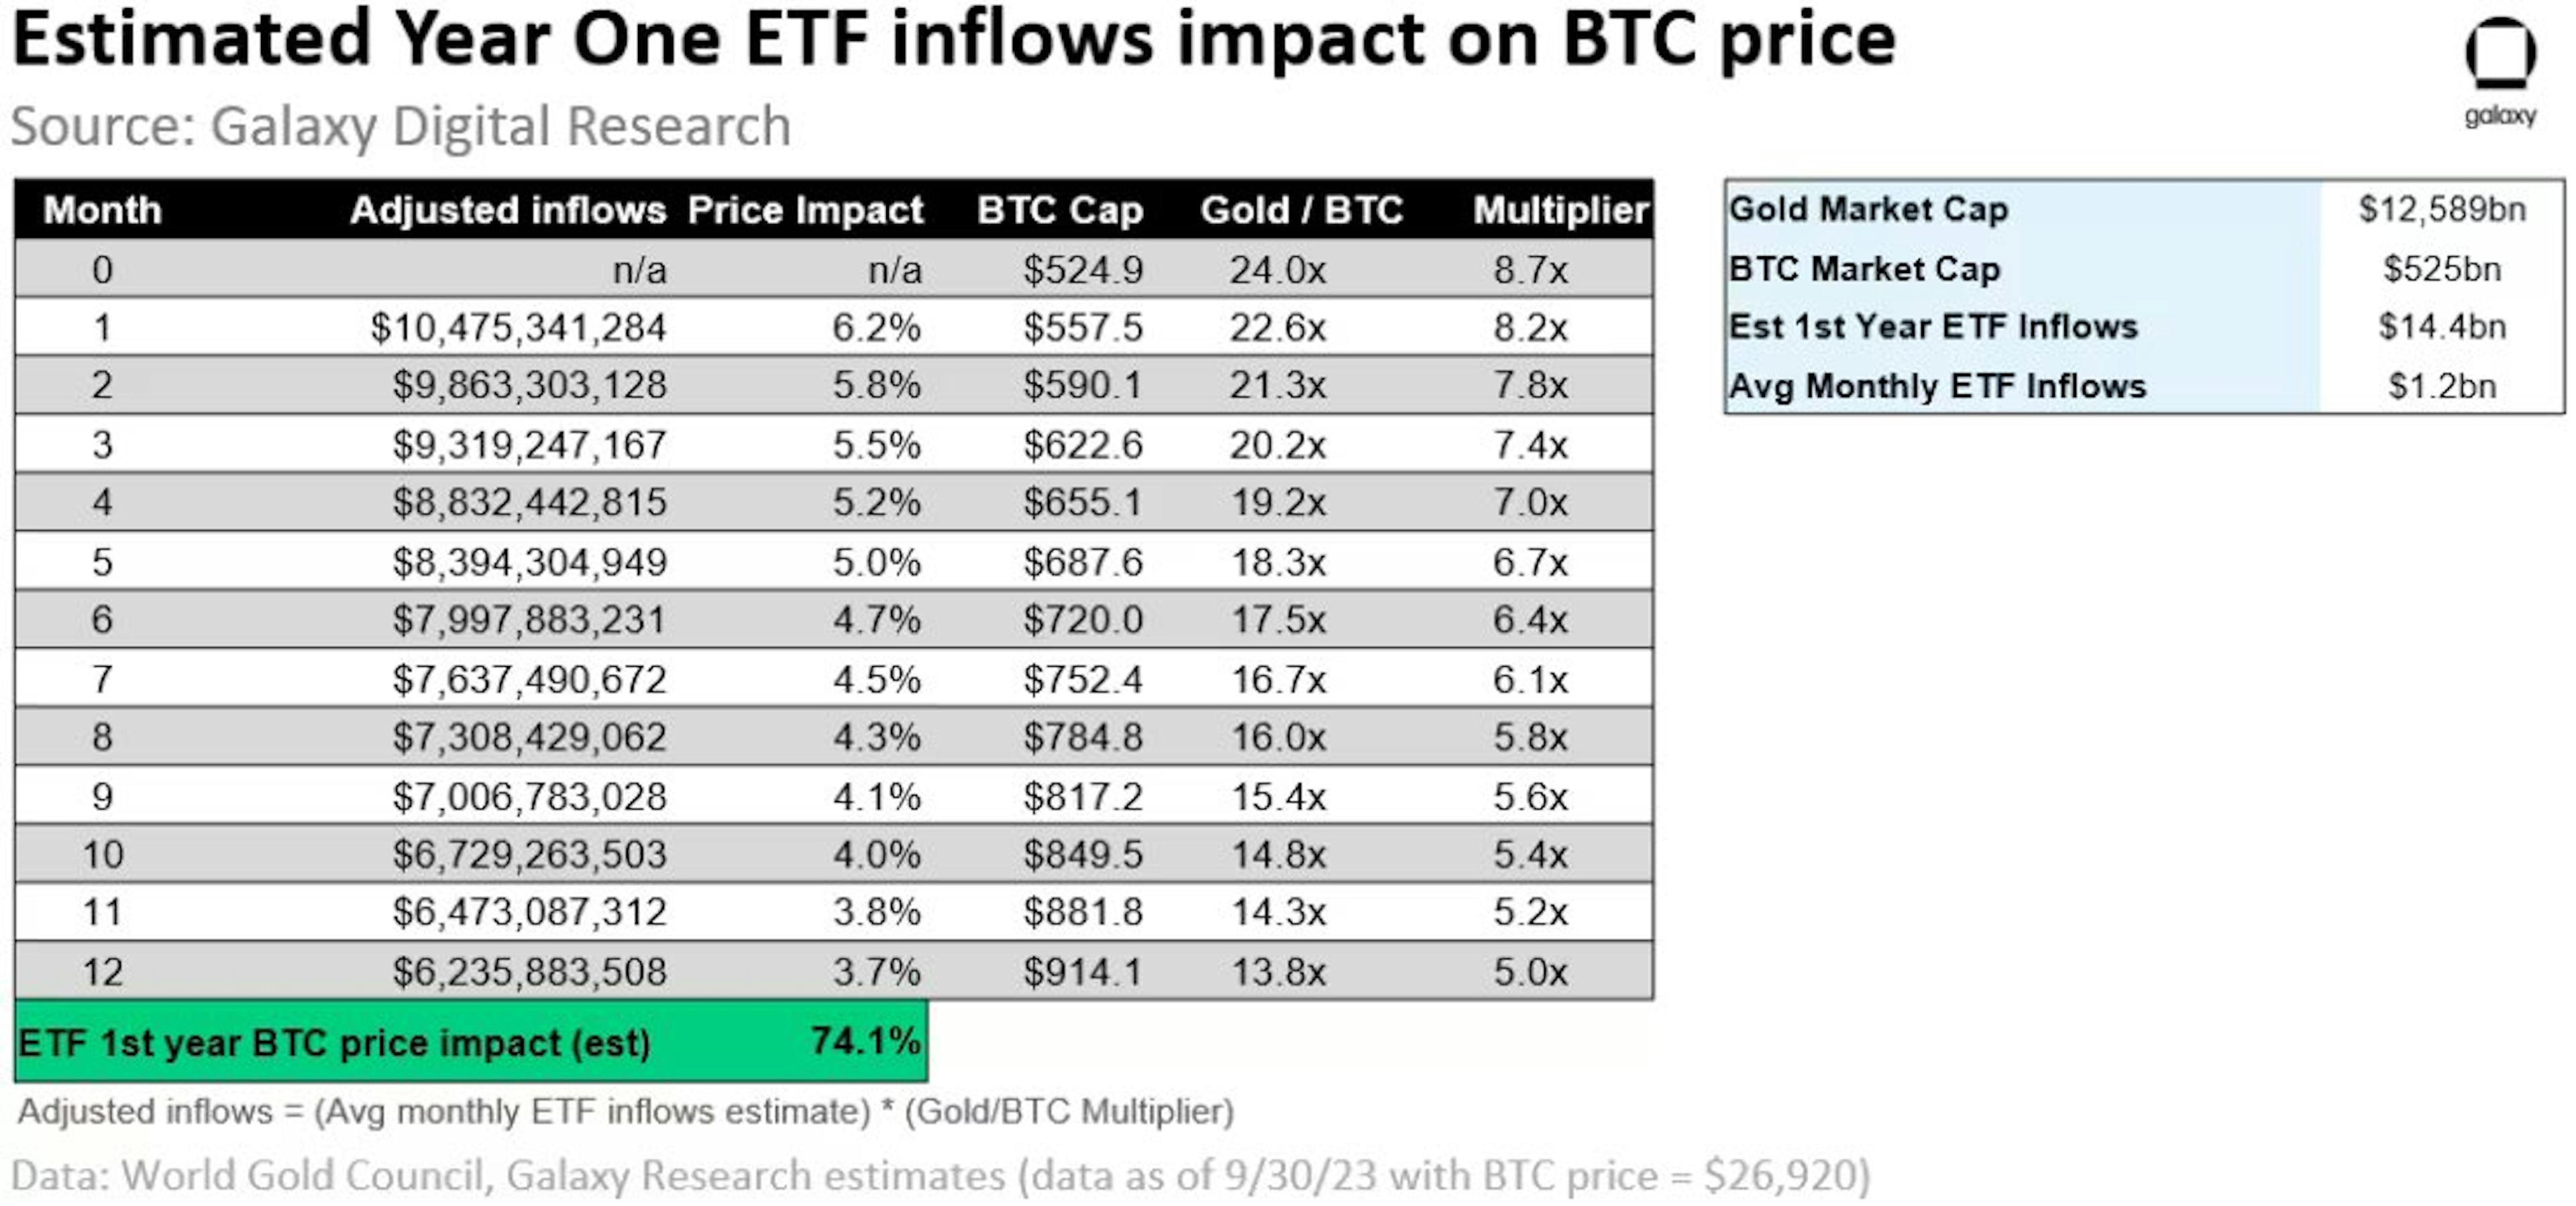 Estimated year one ETF inflows impact on BTC price